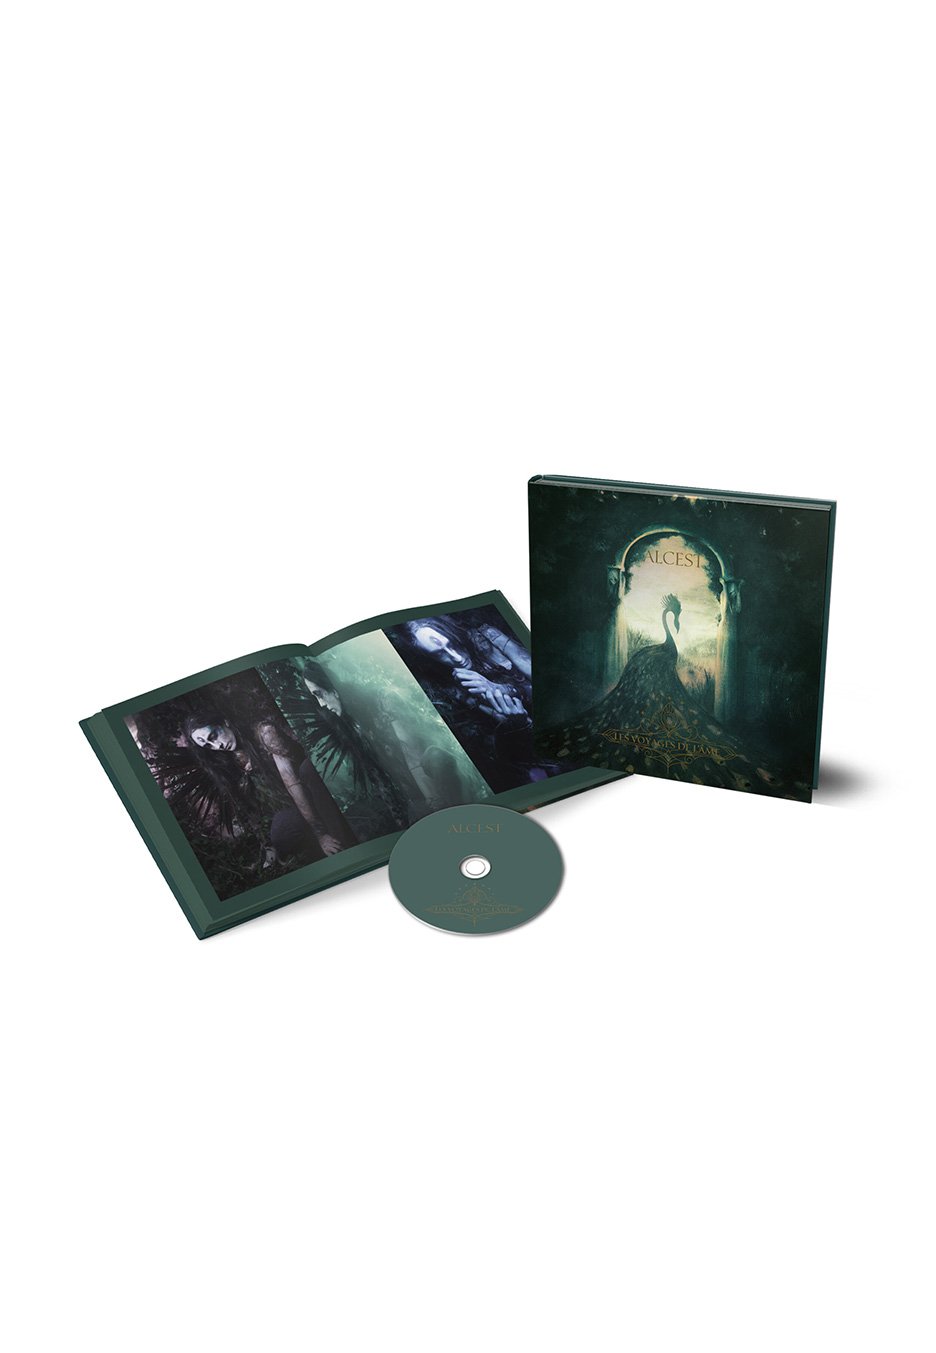 Alcest - Les Voyages De L'Ame (10th Anniversary Edition) - Mediabook CD | Neutral-Image